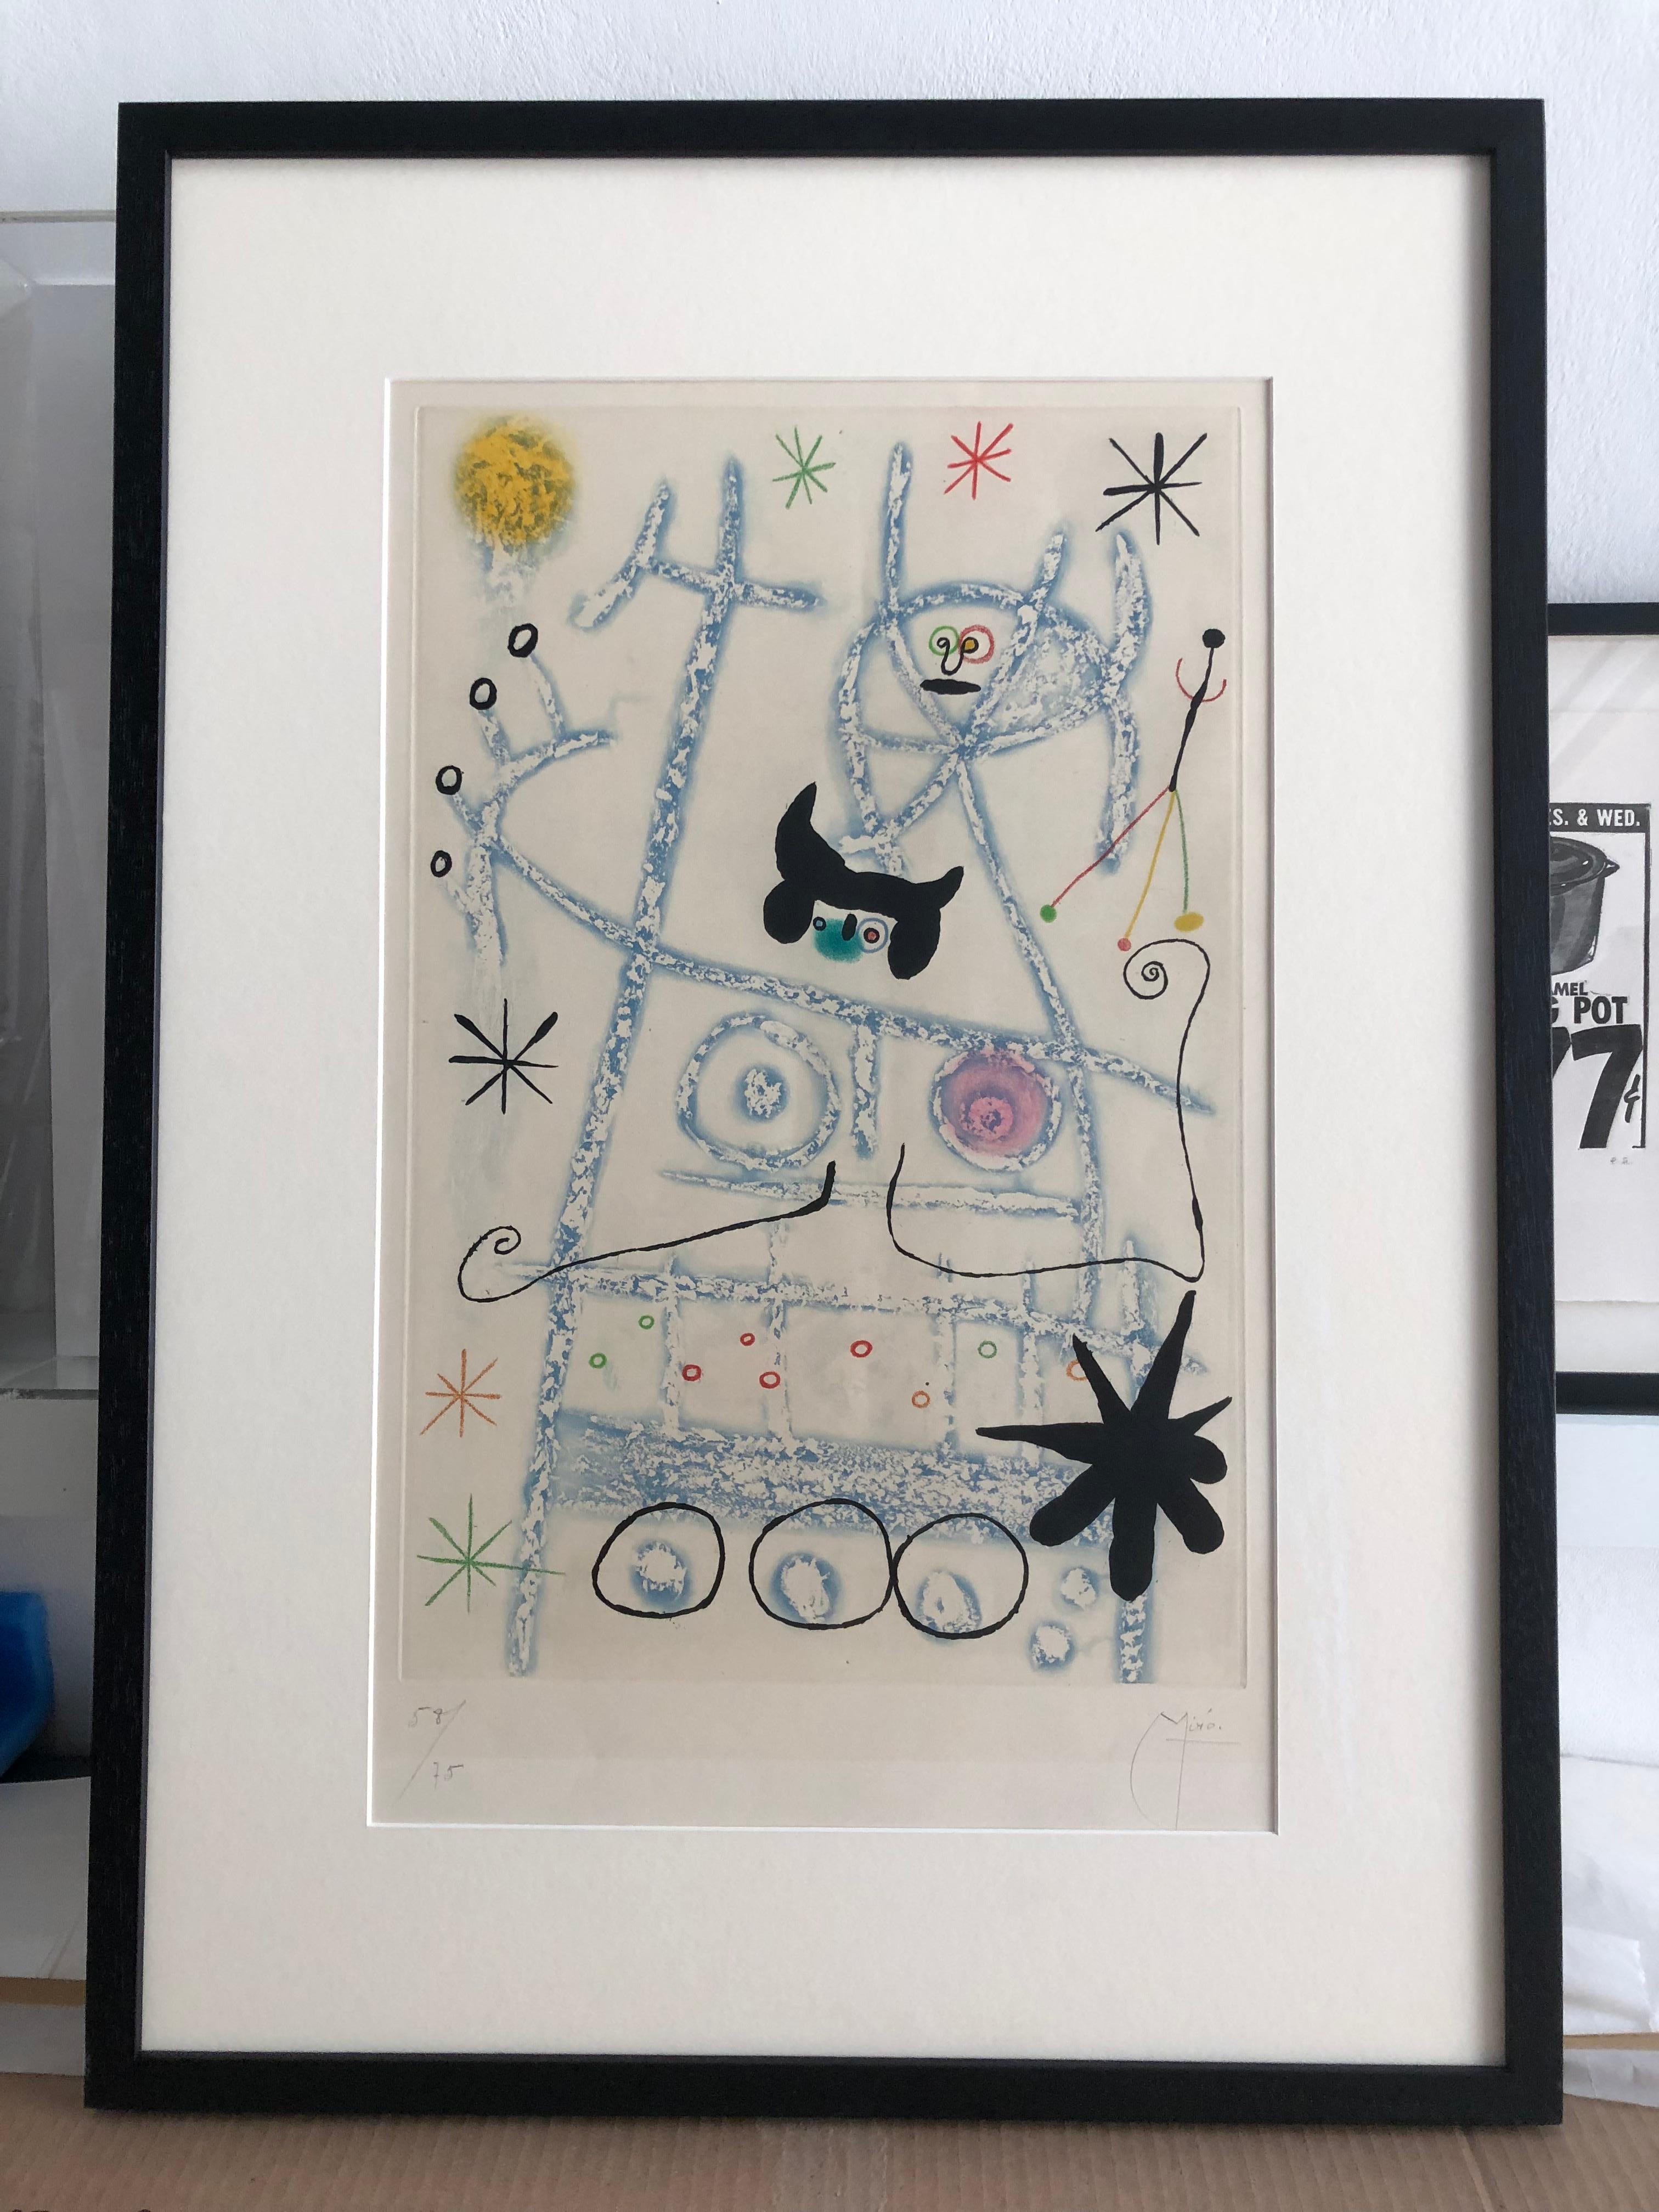 Les Forestiers (Bleu) - Print by Joan Miró